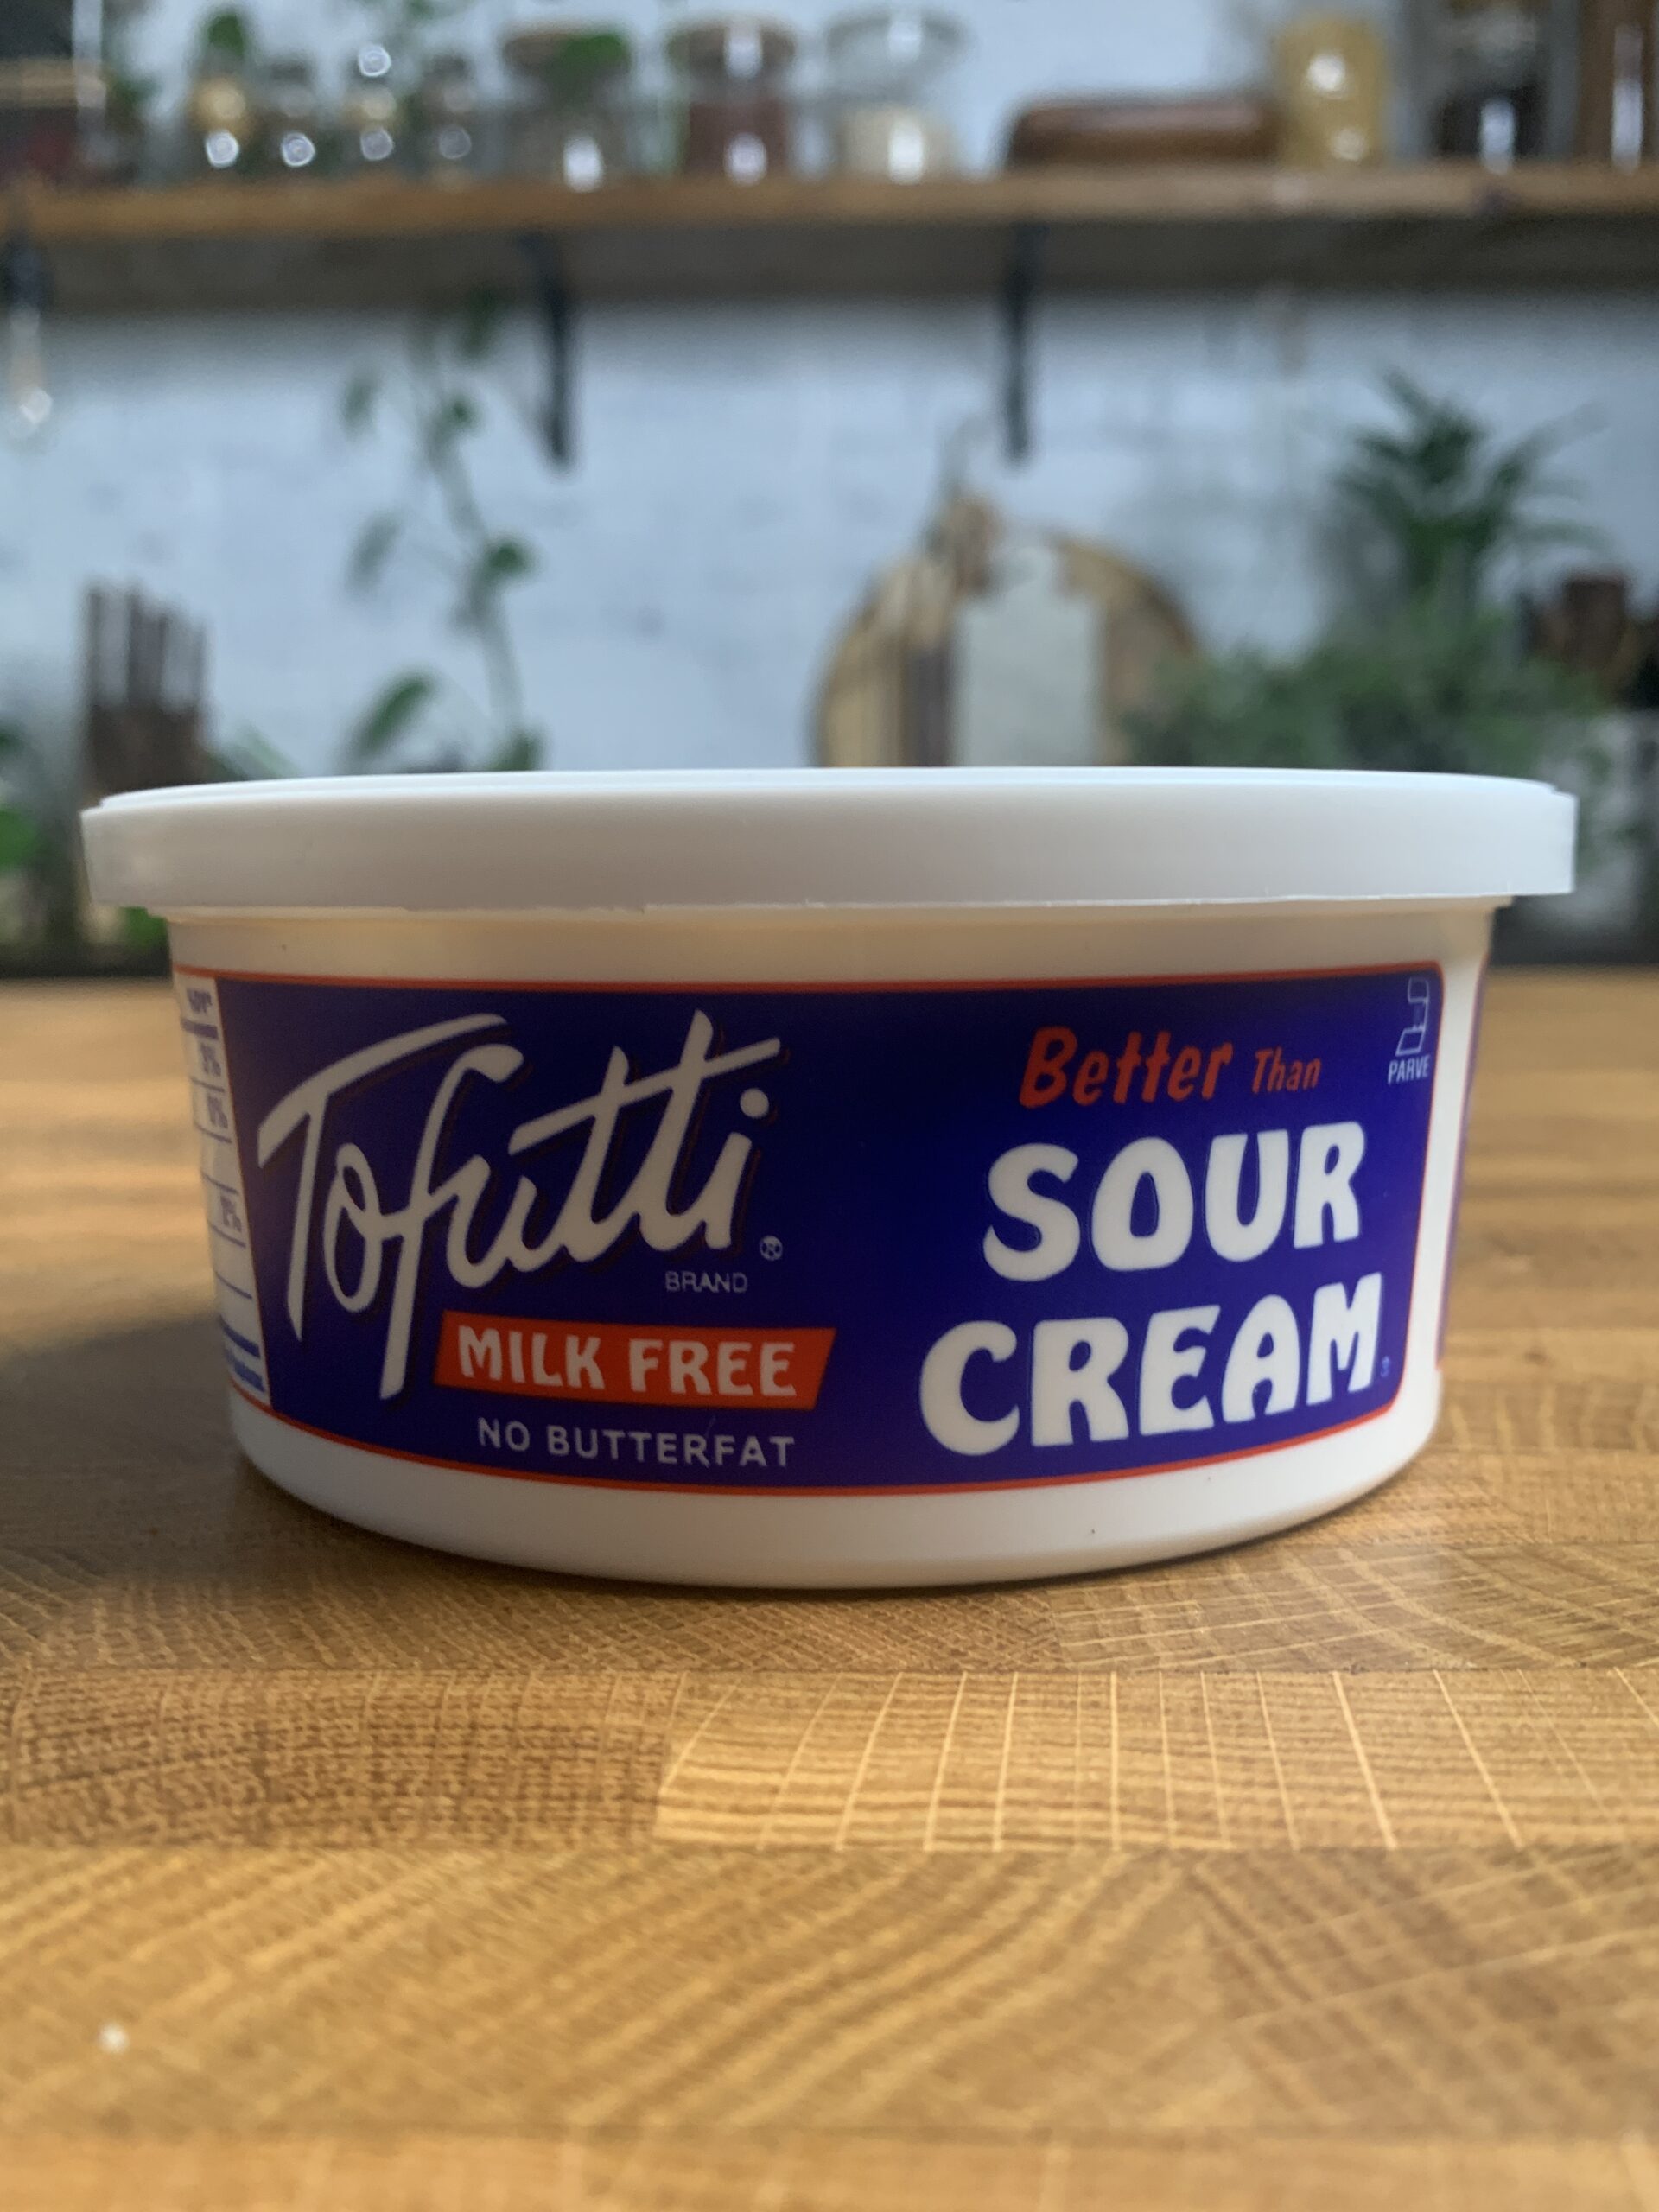 A container of Tofutti Milk Free Sour Cream.